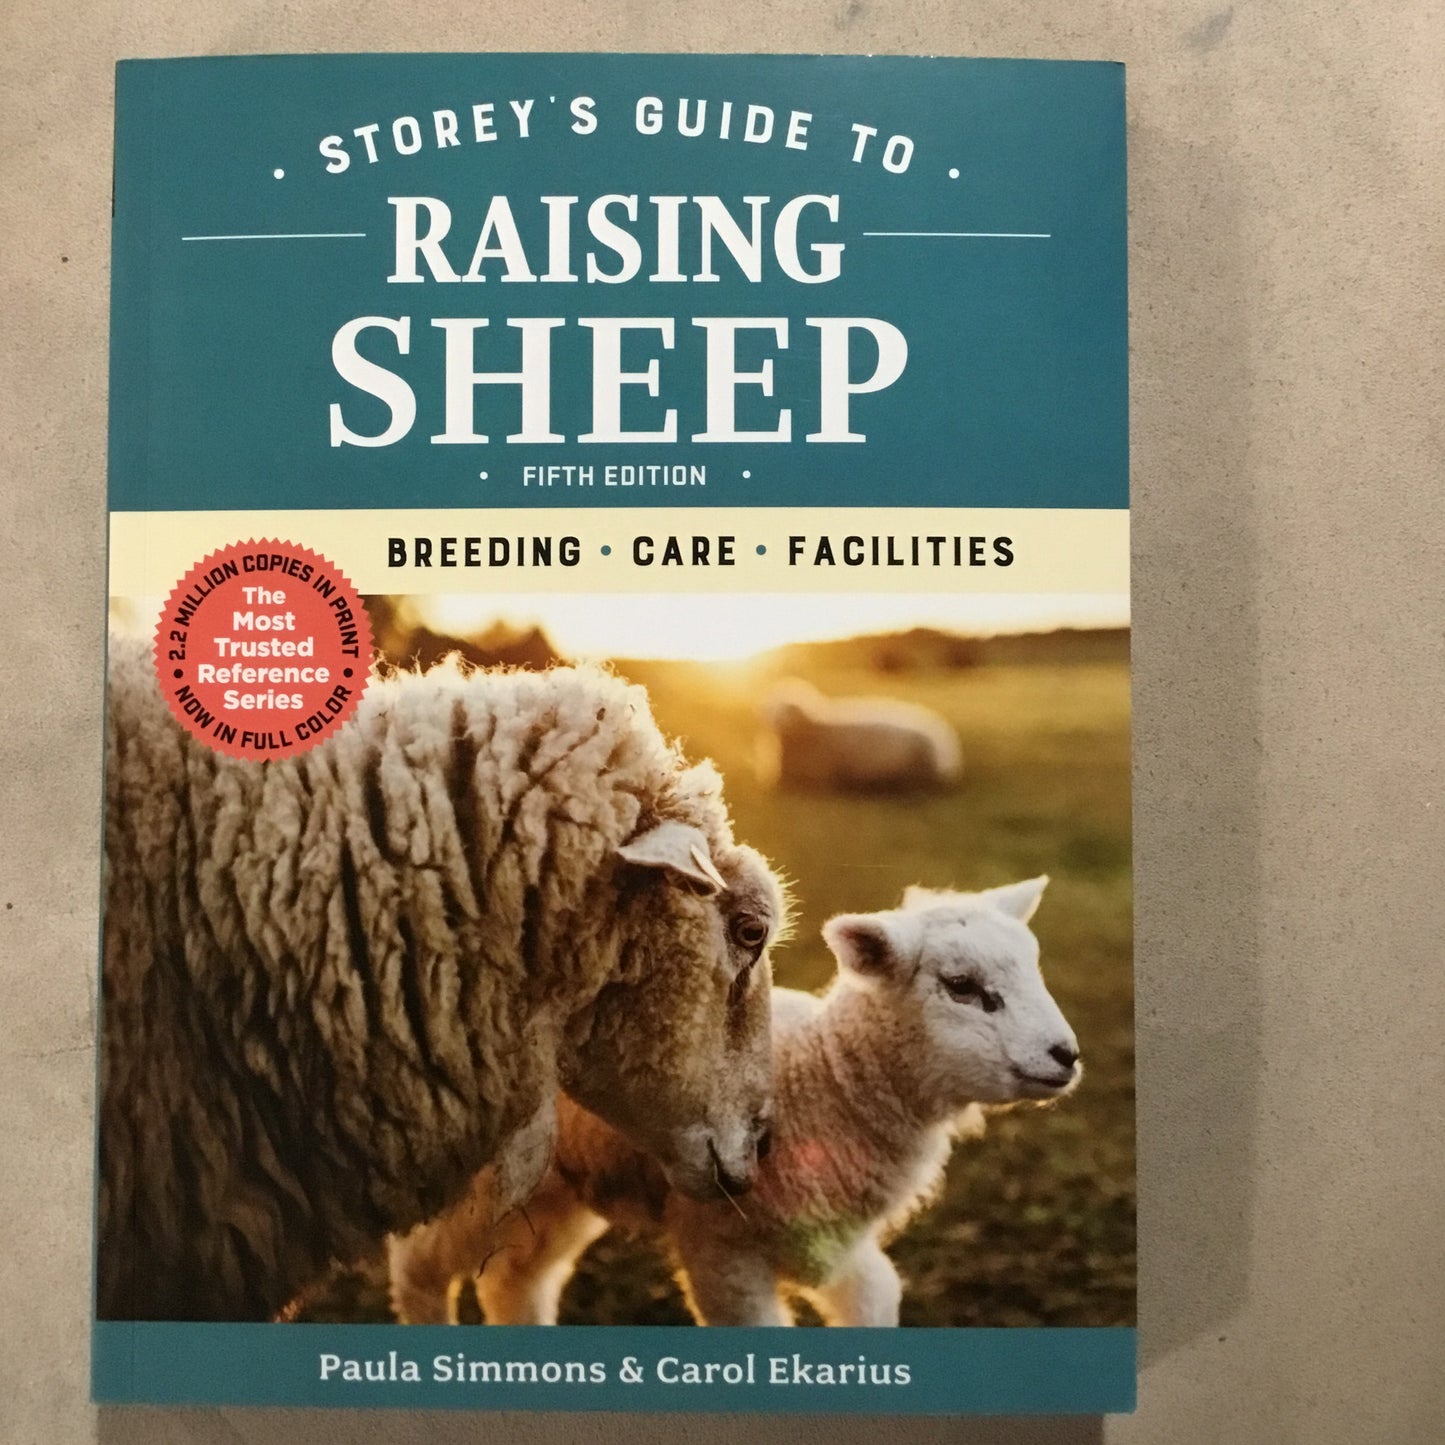 Storey’s Guide to Raising Sheep